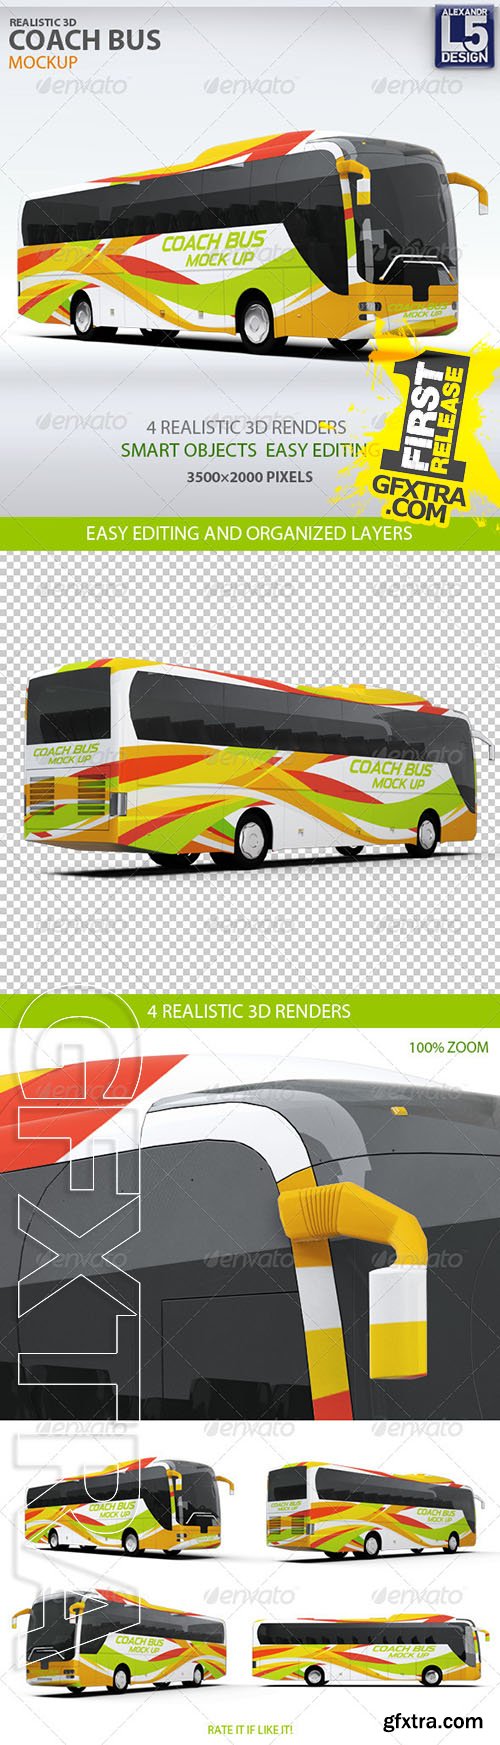 Graphicriver - Coach Bus mockup 8171980